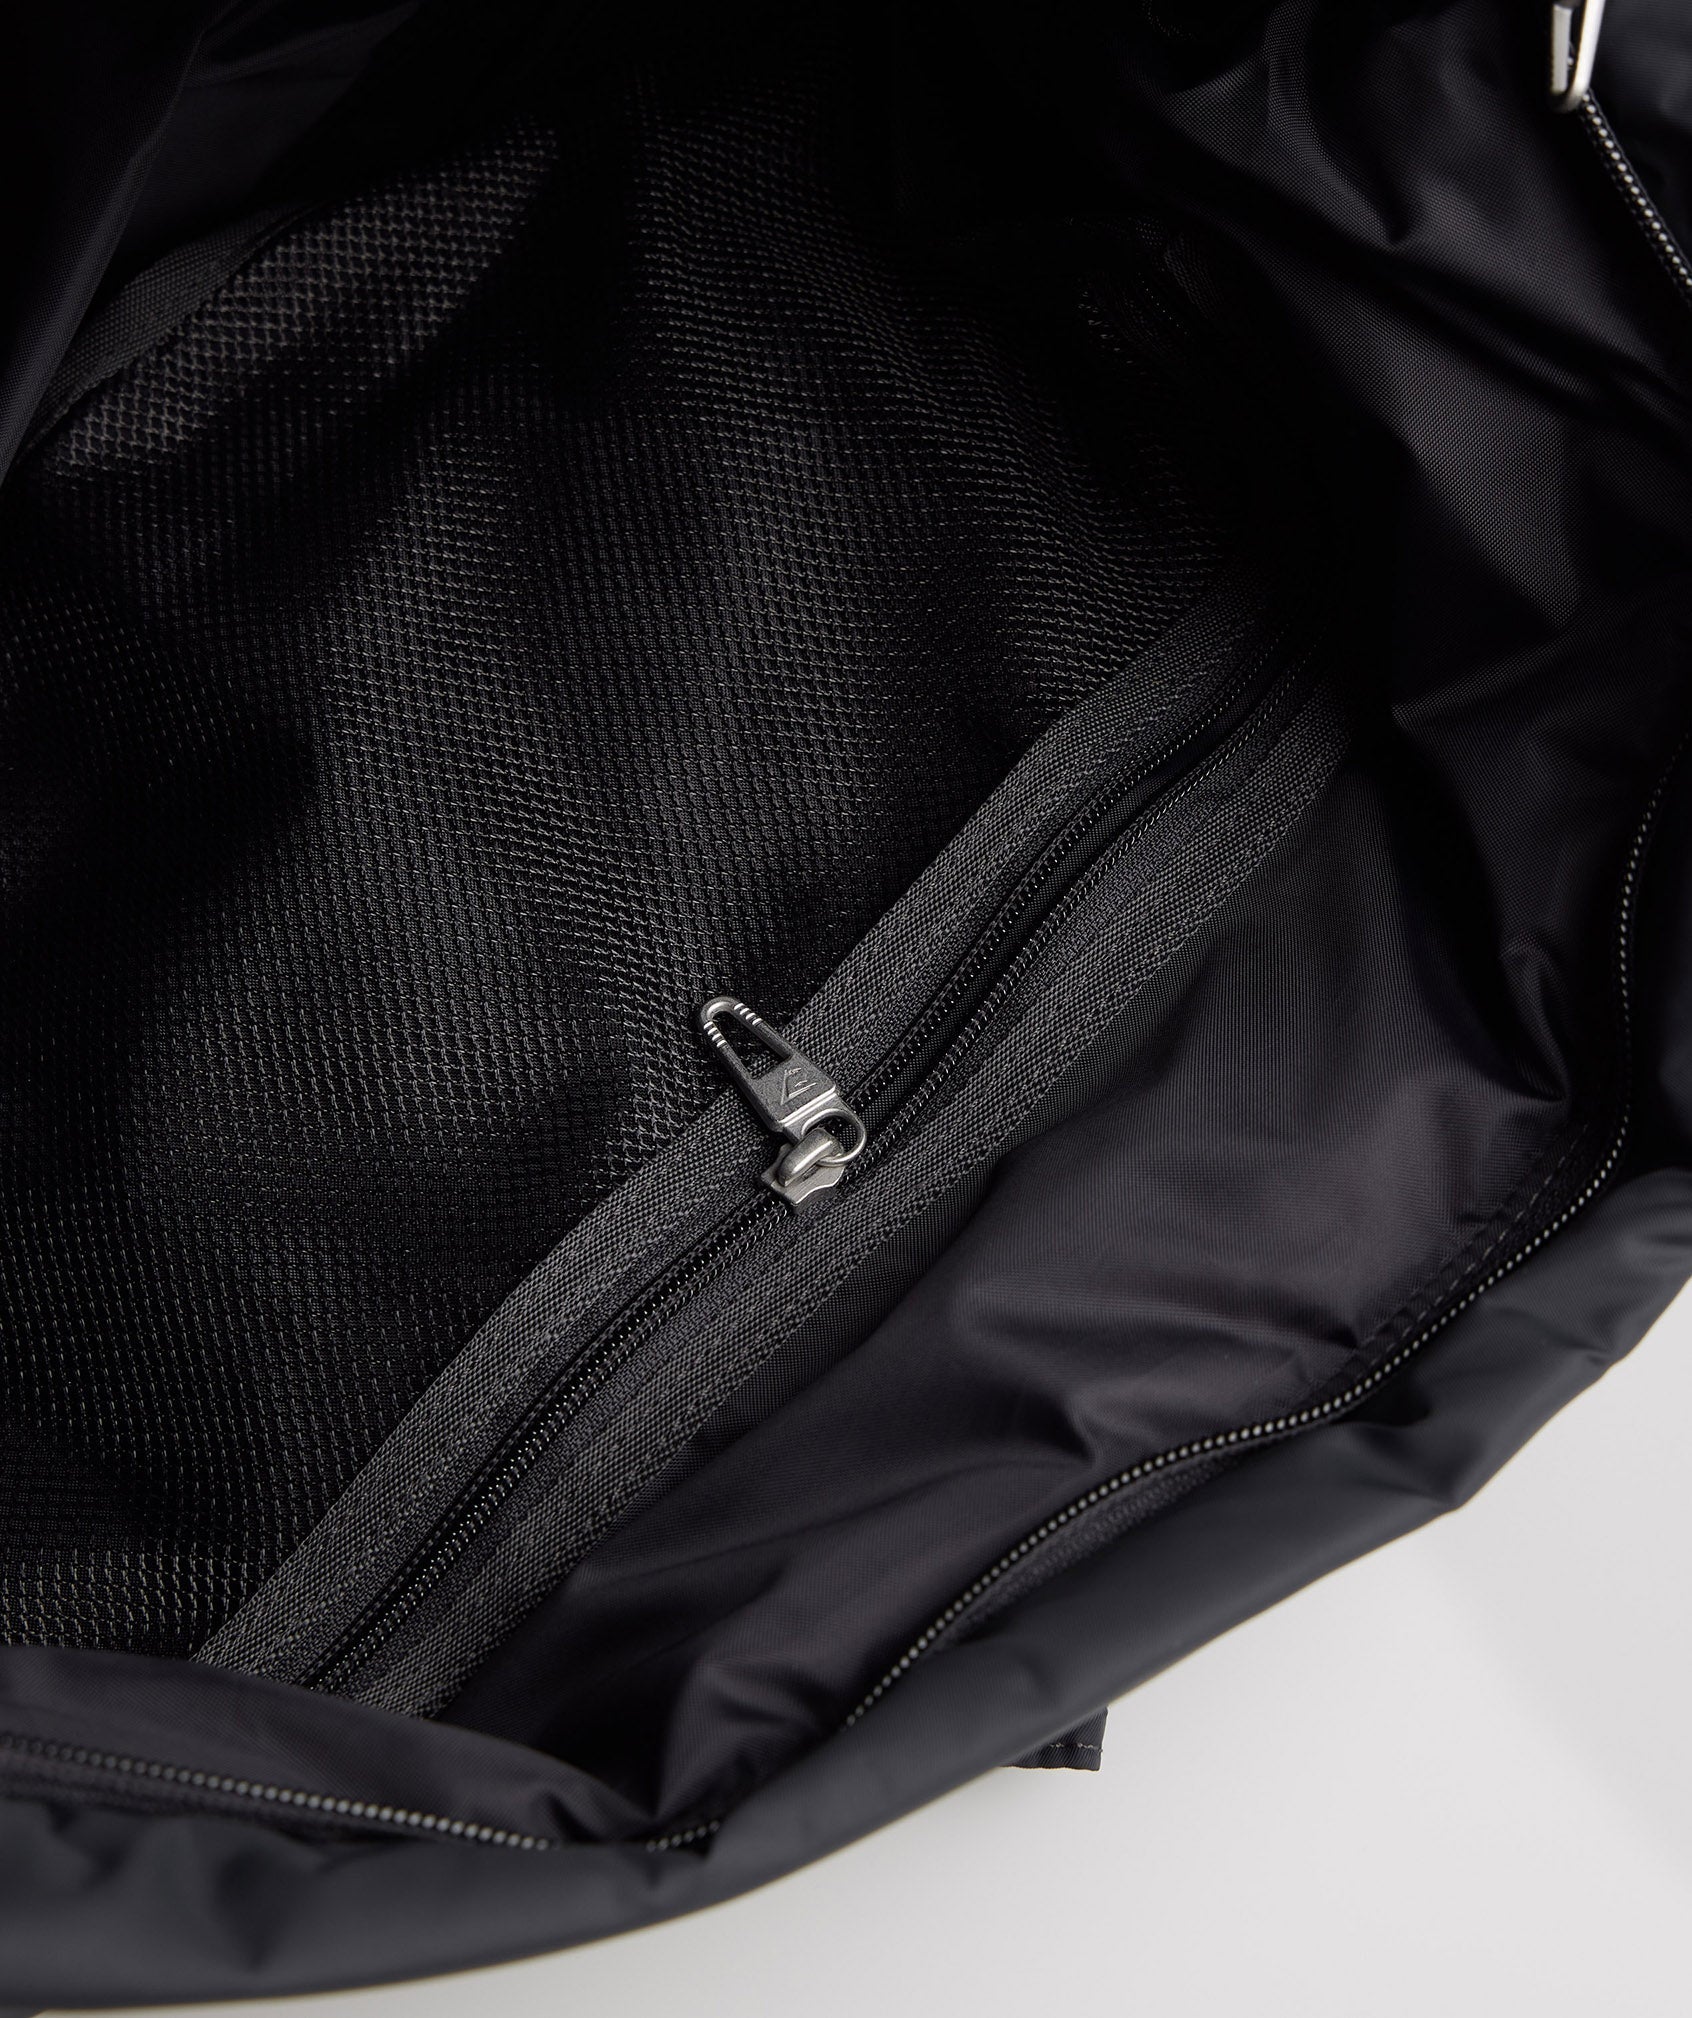 Premium Lifestyle Barrel Bag in Onyx Grey - view 5